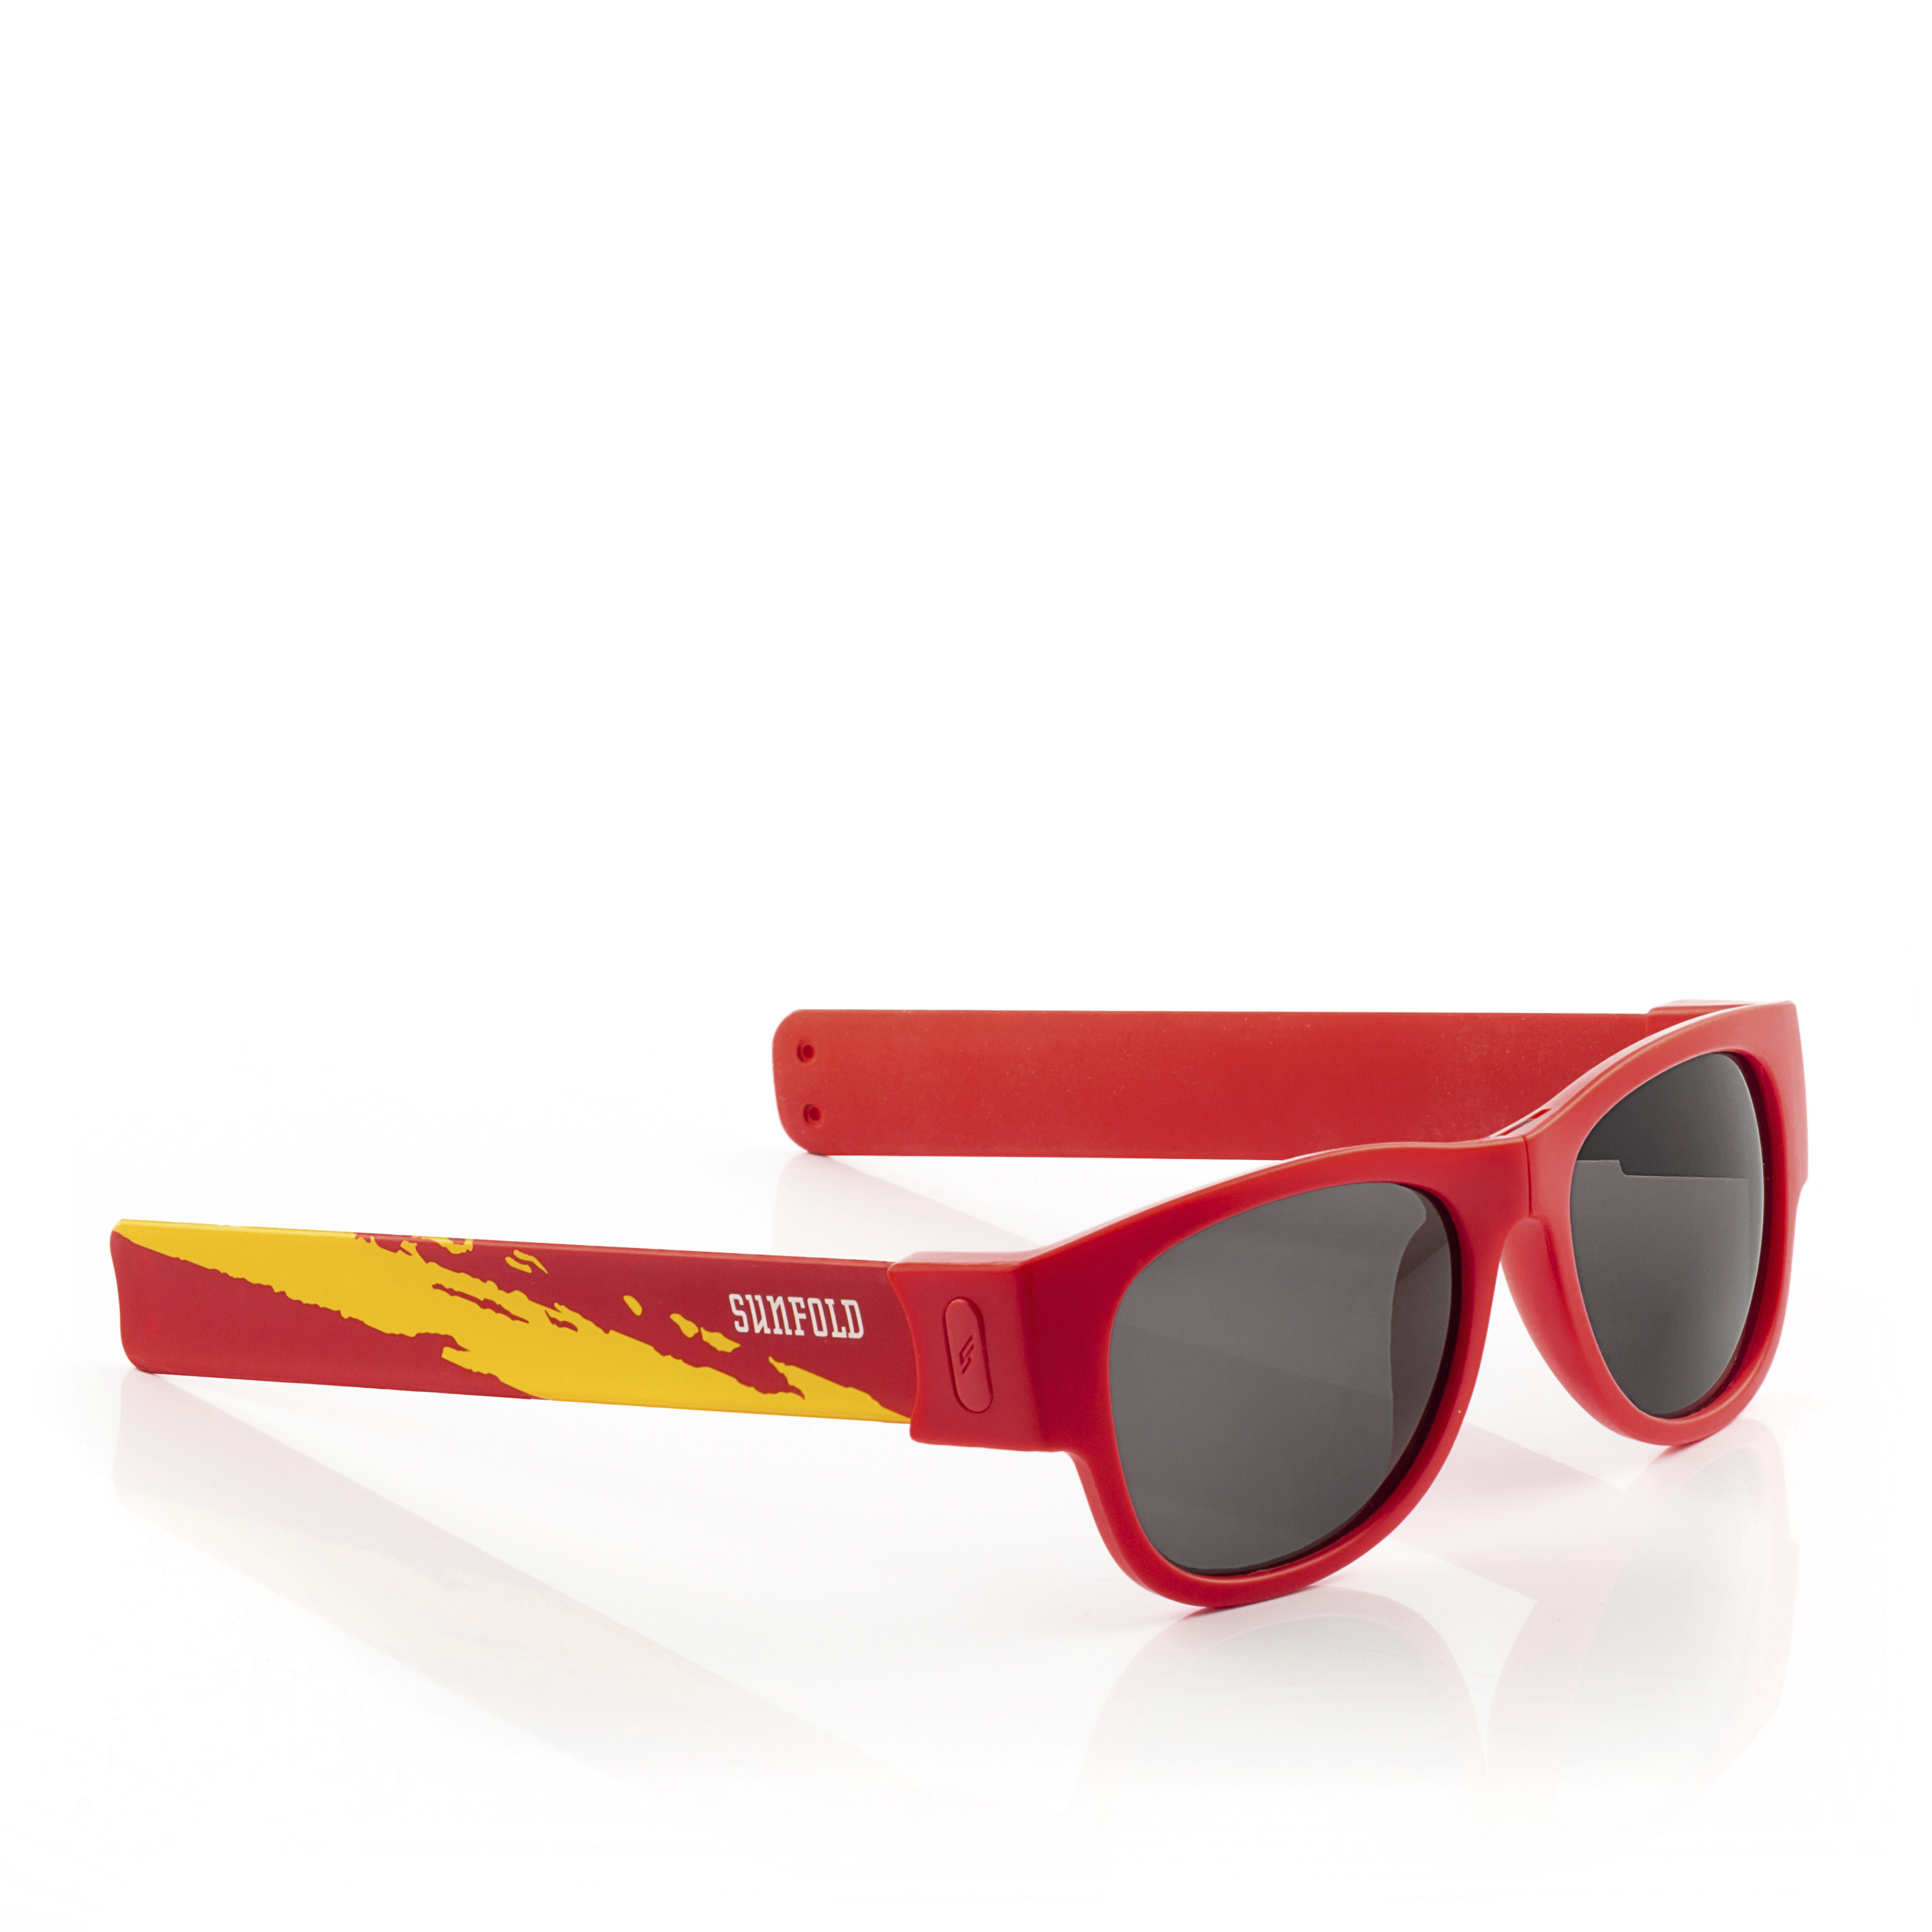 Gafas De Sol Enrollables Sunfold Mundial Spain Red - Multicolor  MKP